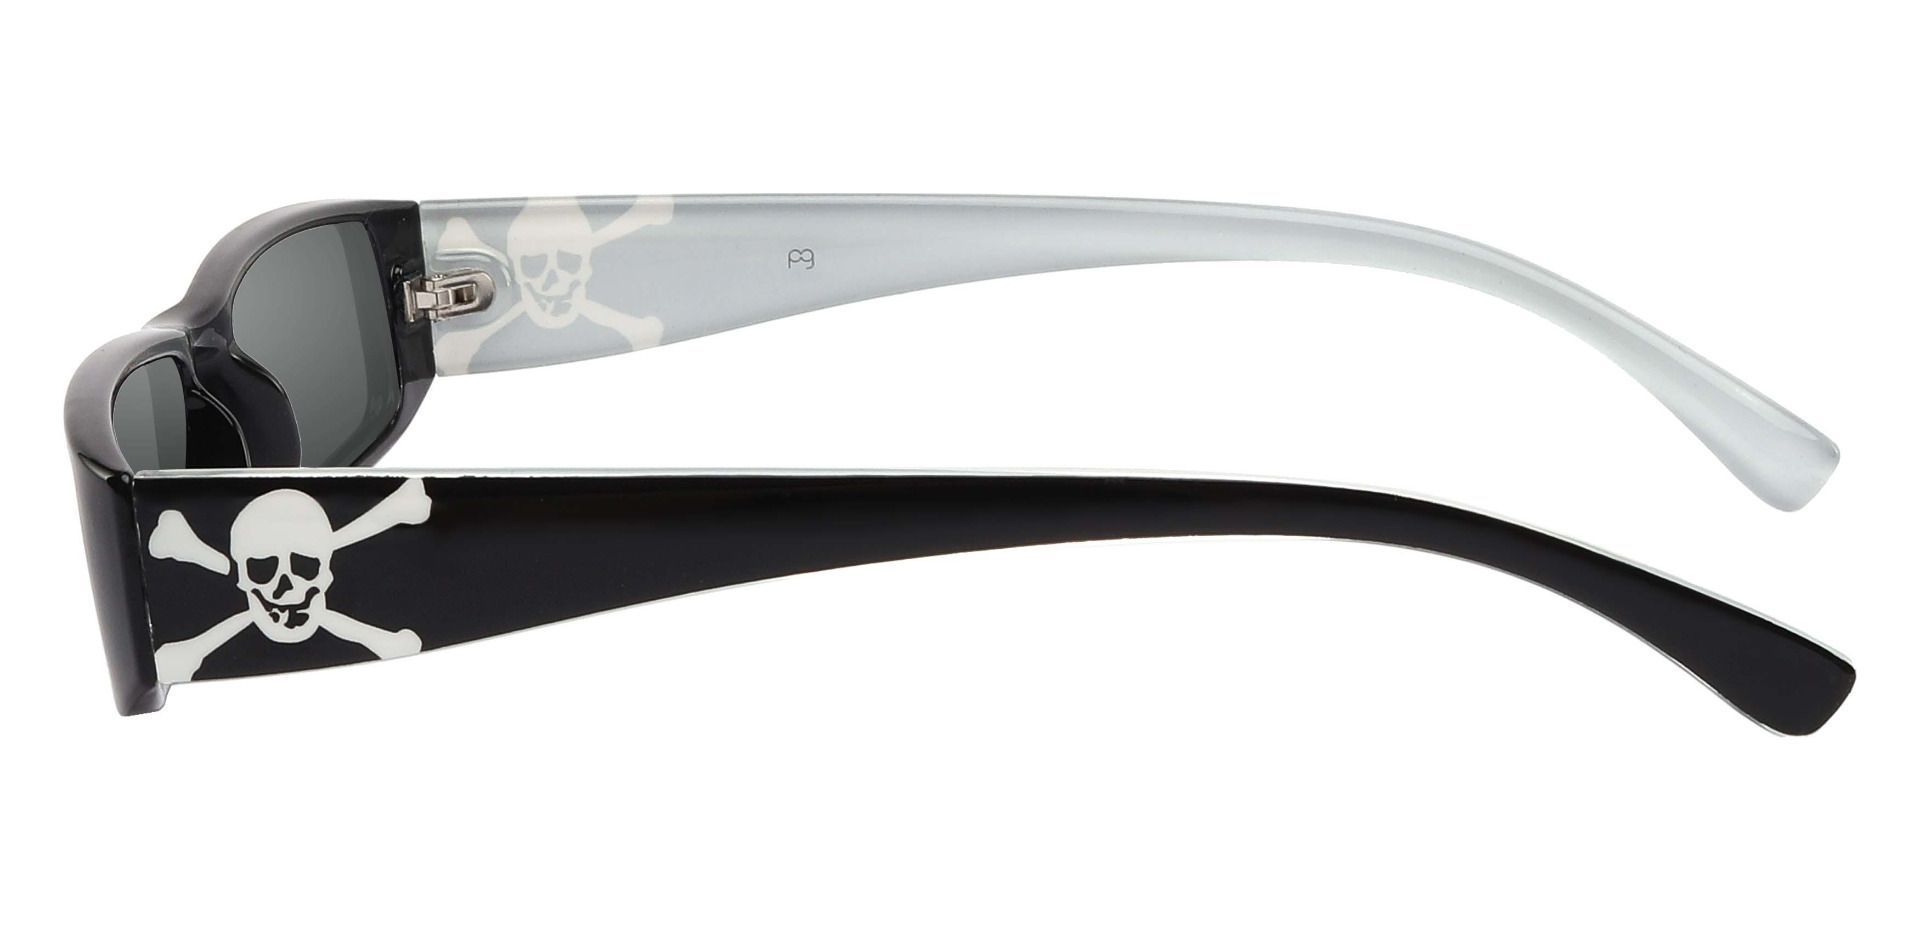 Buccaneer Rectangle Reading Sunglasses - Black Frame With Gray Lenses